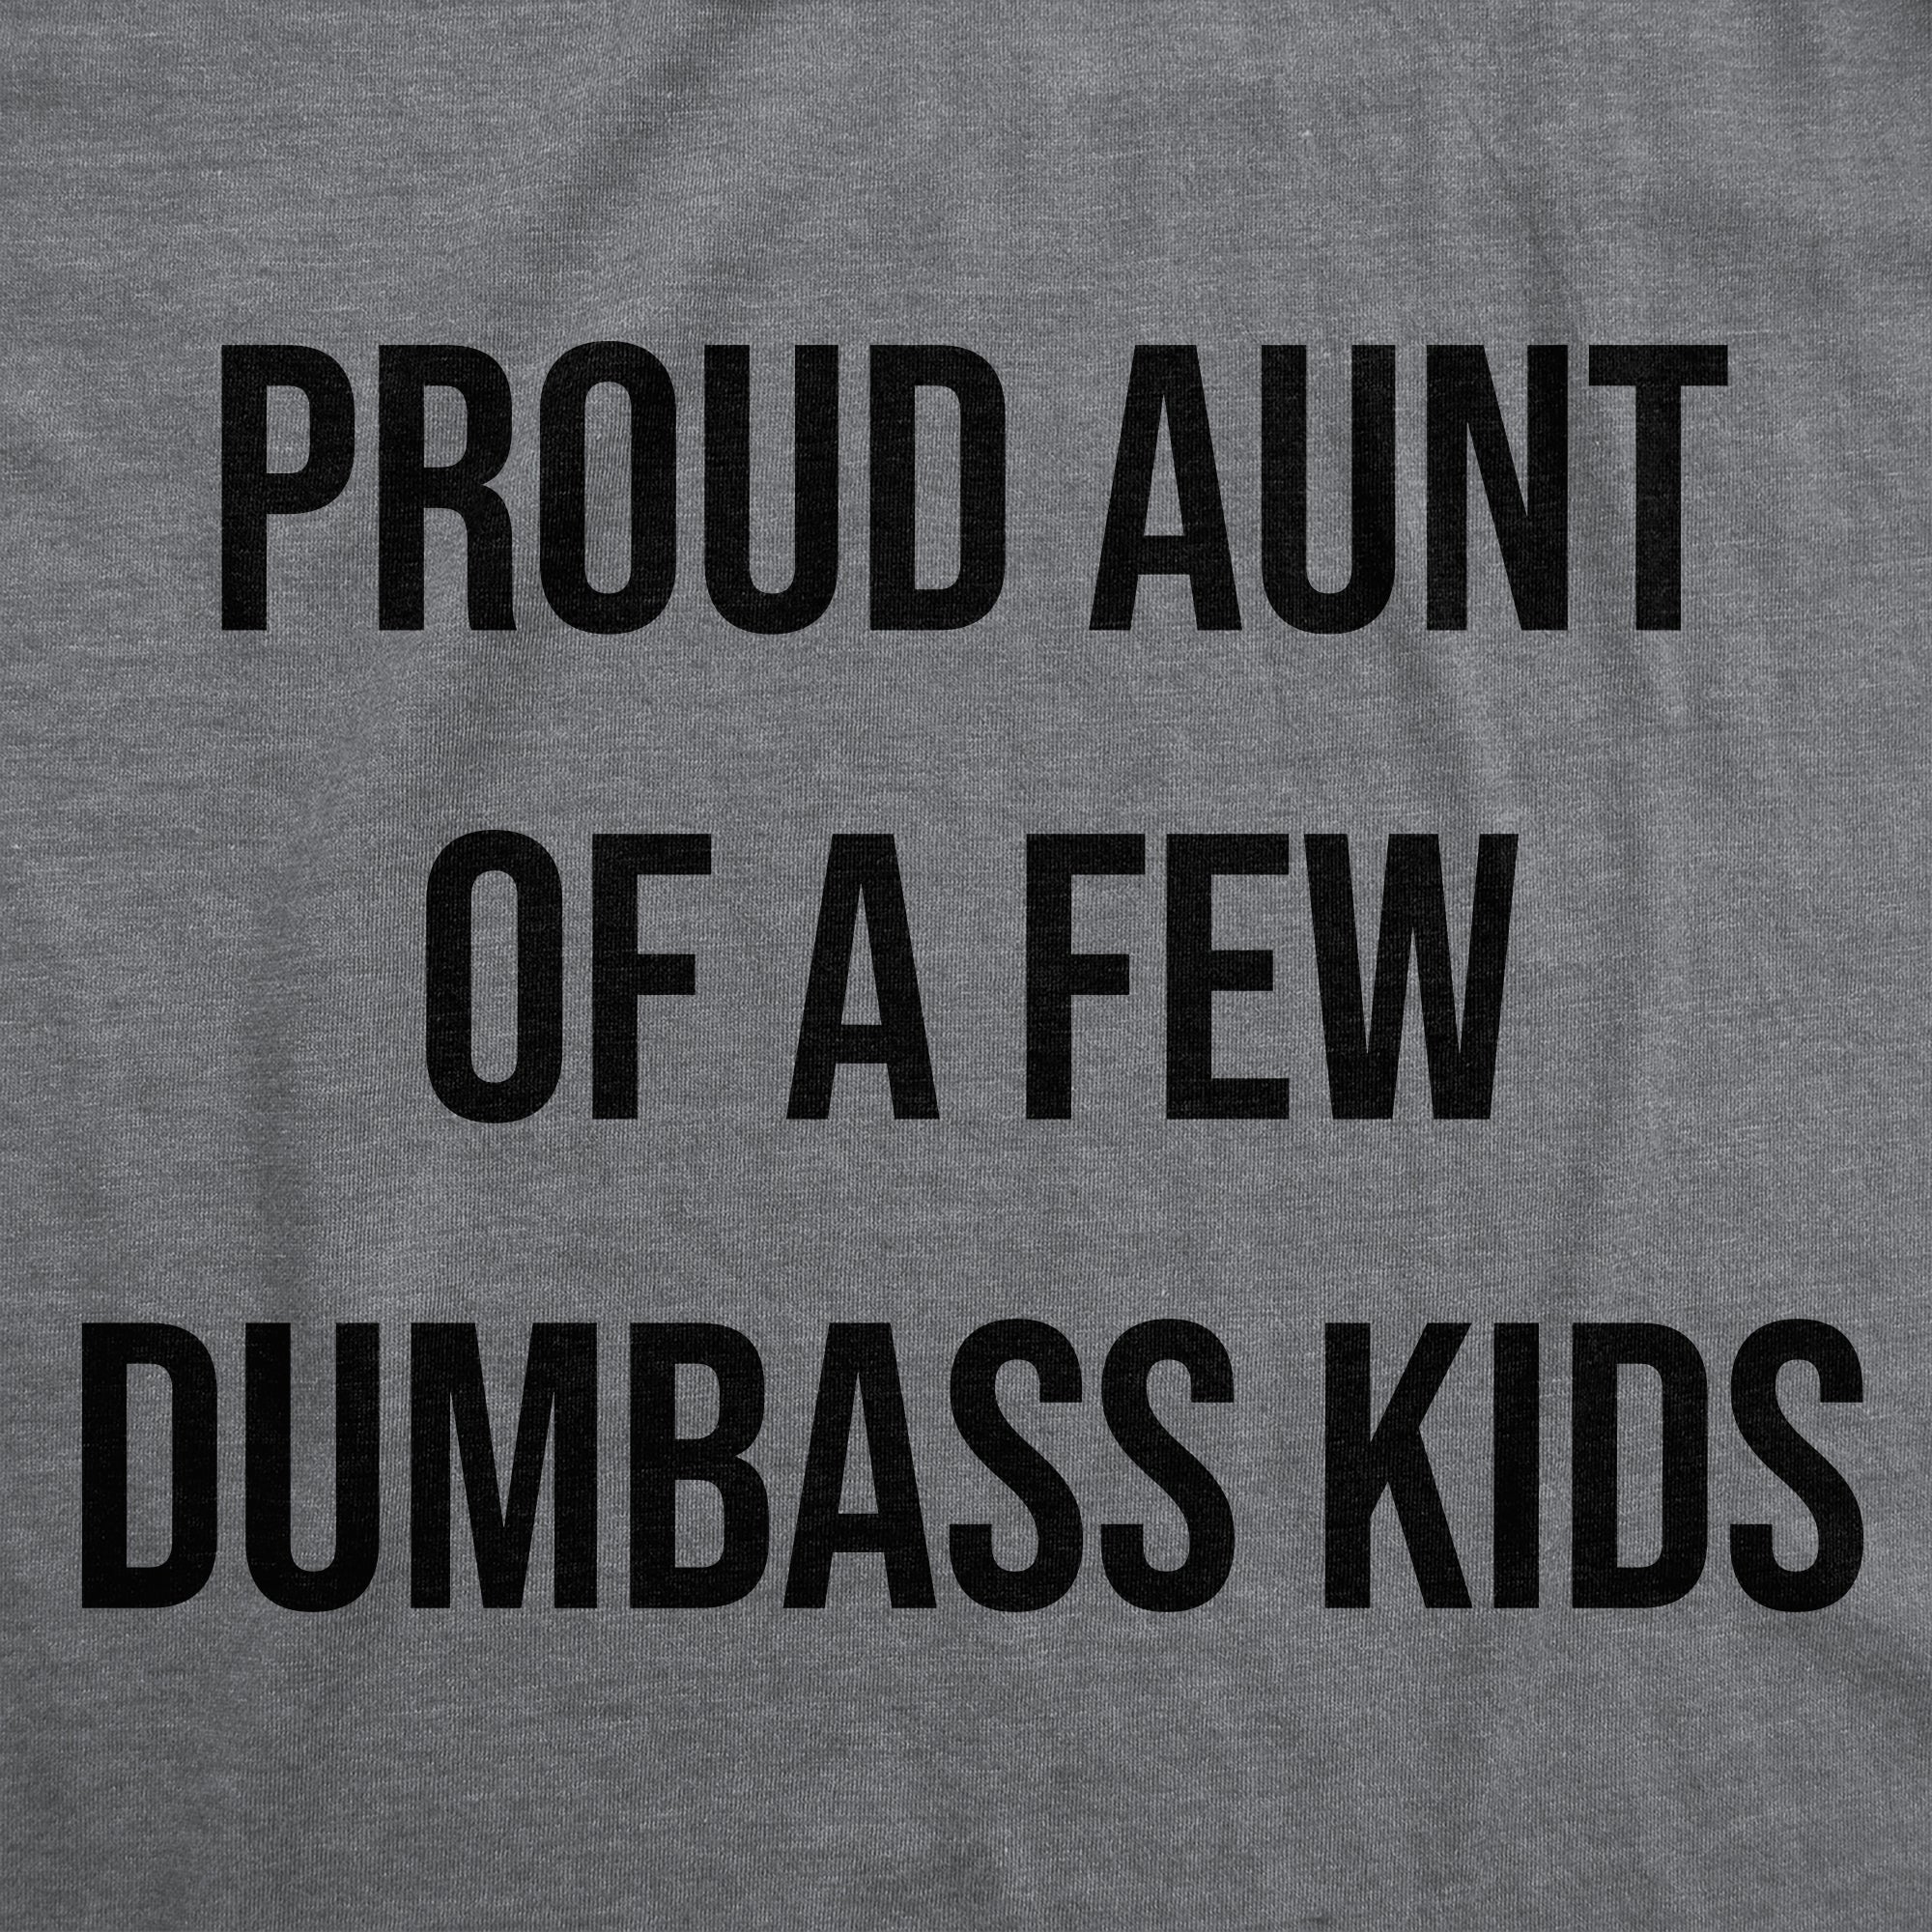 Funny Dark Heather Grey - Proud Aunt Proud Aunt Of A Few Dumbass Kids Womens T Shirt Nerdy Aunt sarcastic Tee